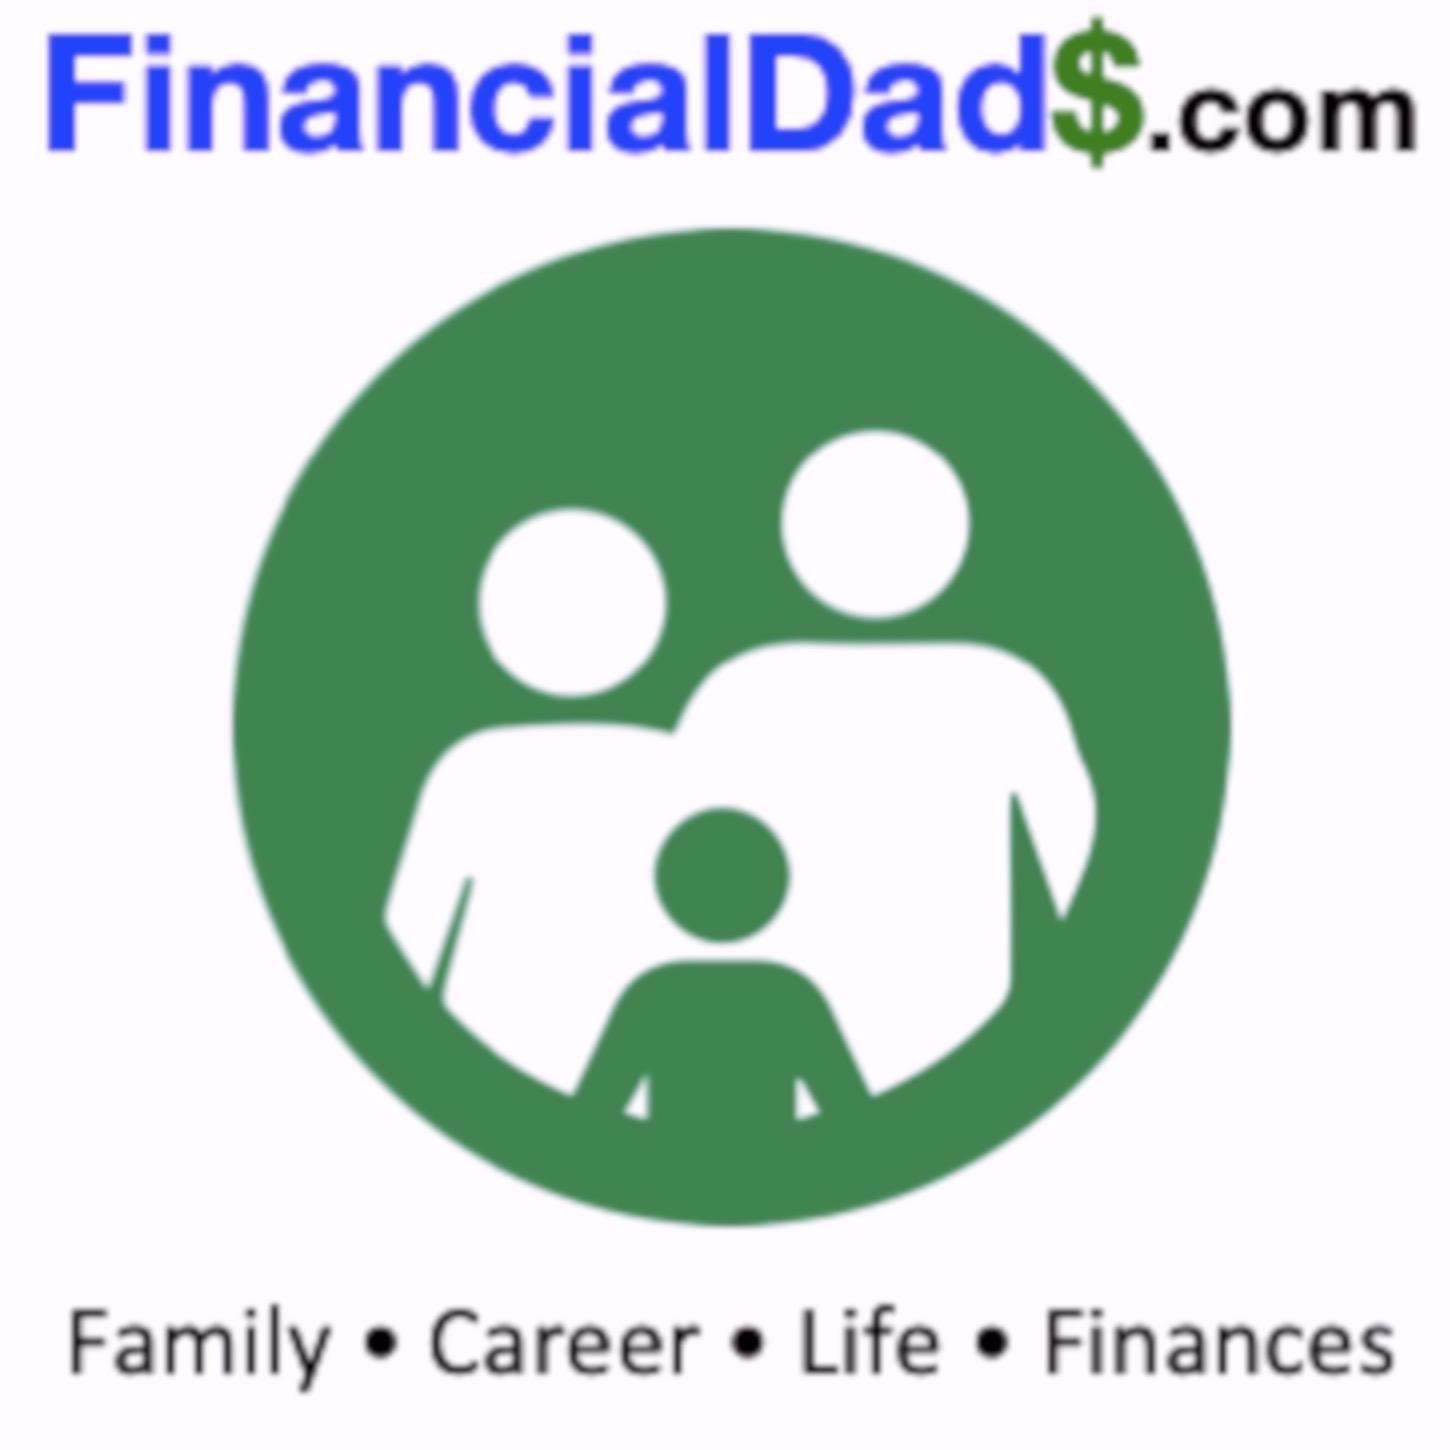 Financial Dads